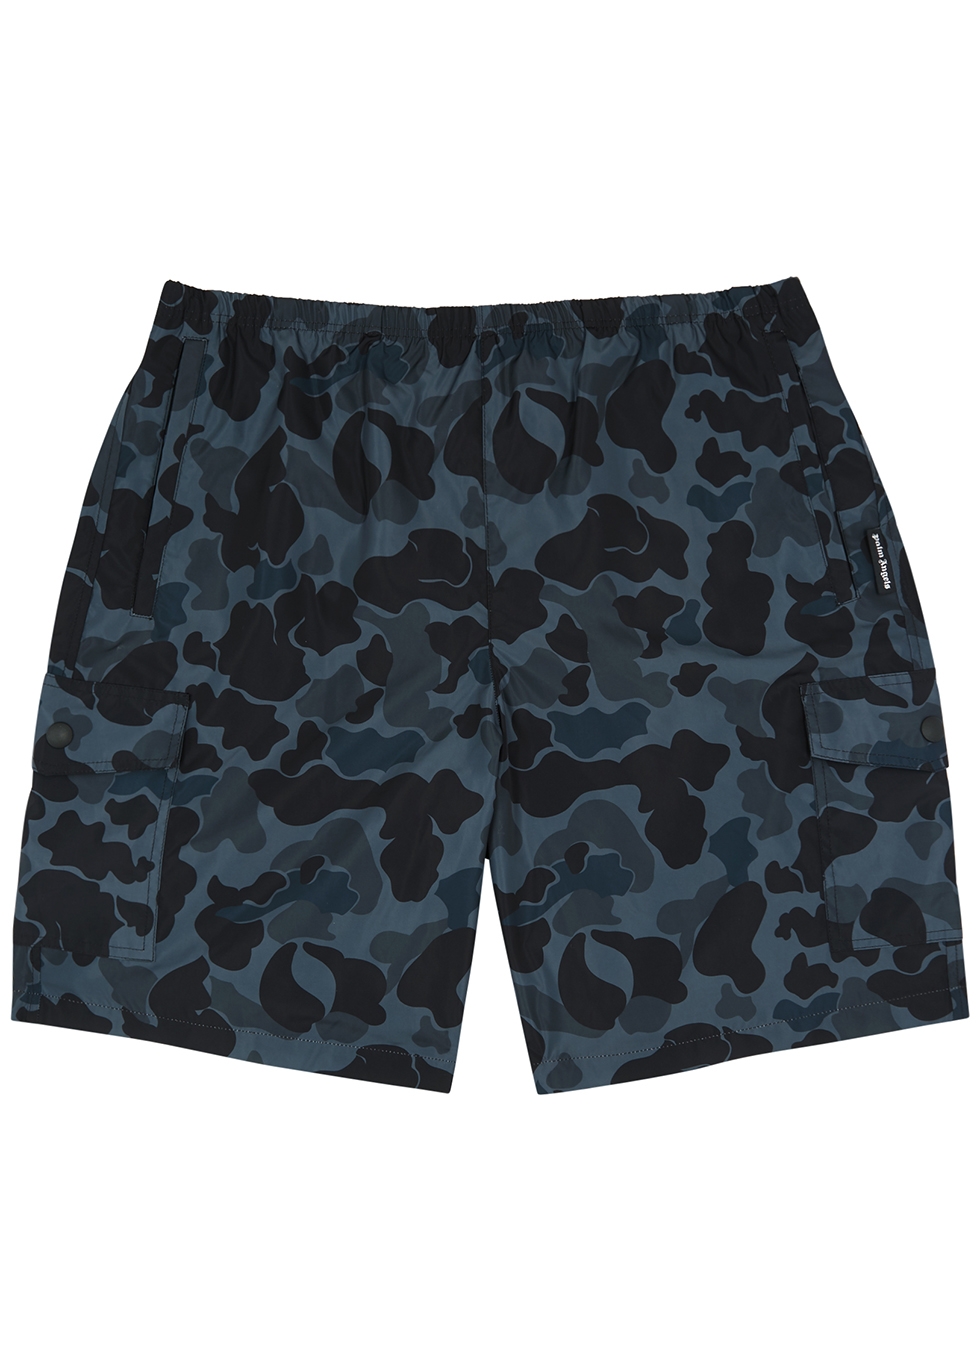 Grey camouflage-print swim shorts